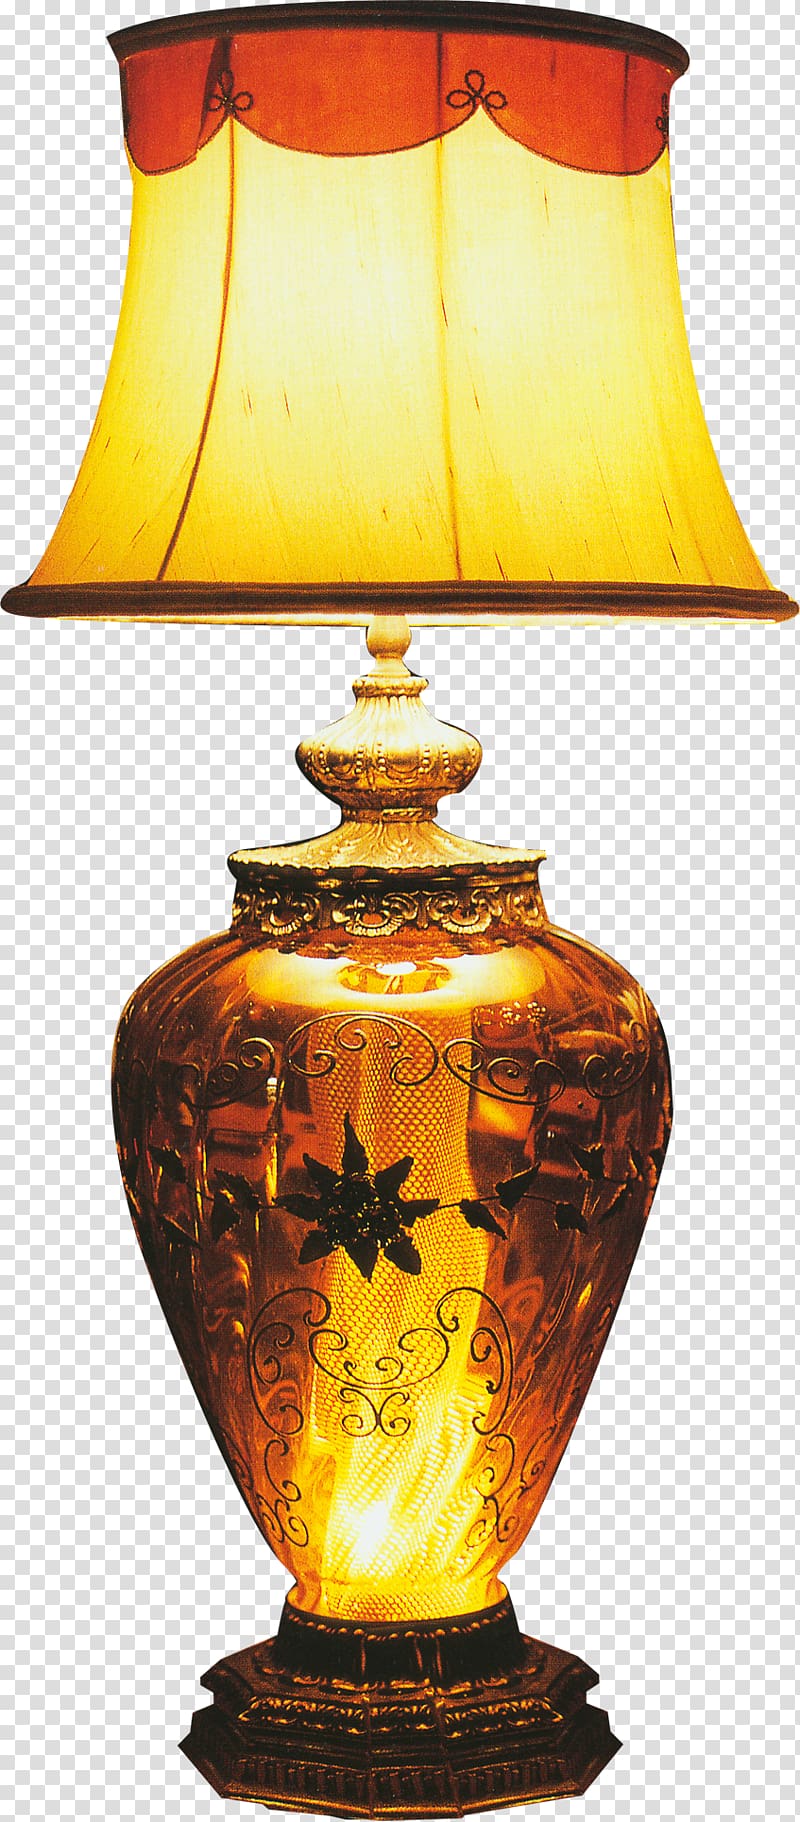 Vase Furniture Luxury Lamp, Upscale golden lamp illuminated transparent background PNG clipart